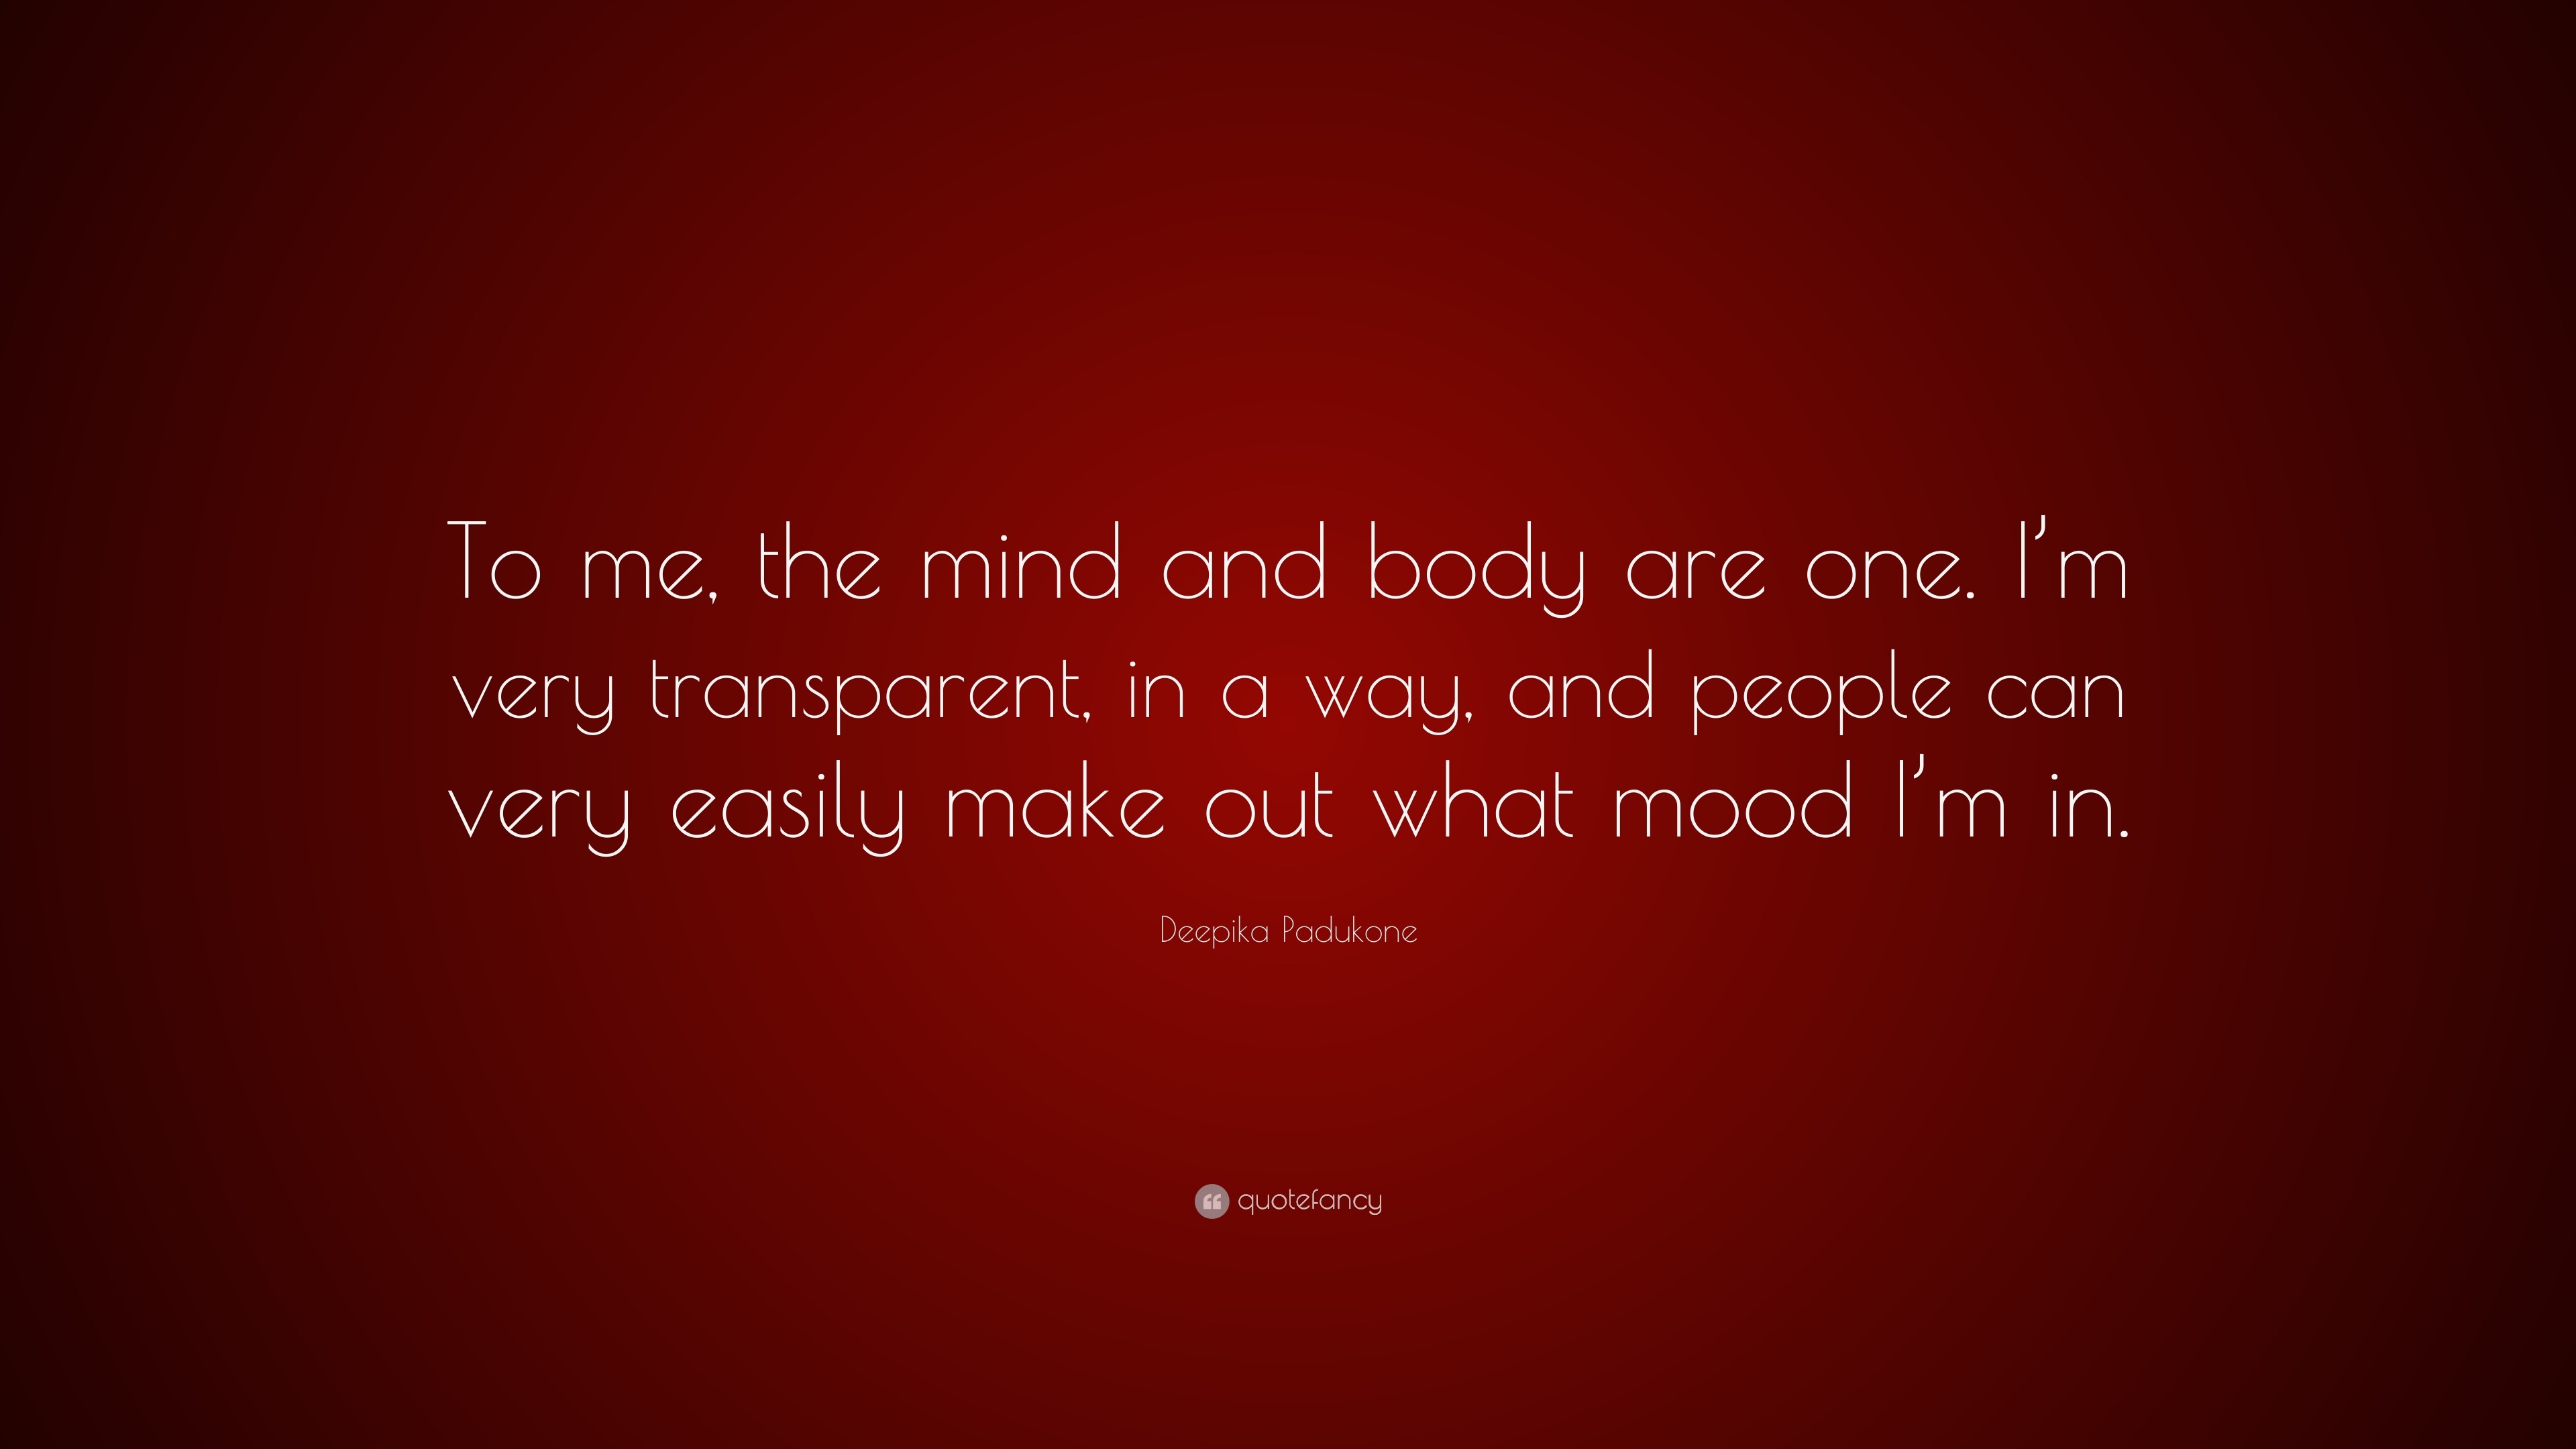 Deepika Padukone quote: I am enjoying myself and I do not mind the